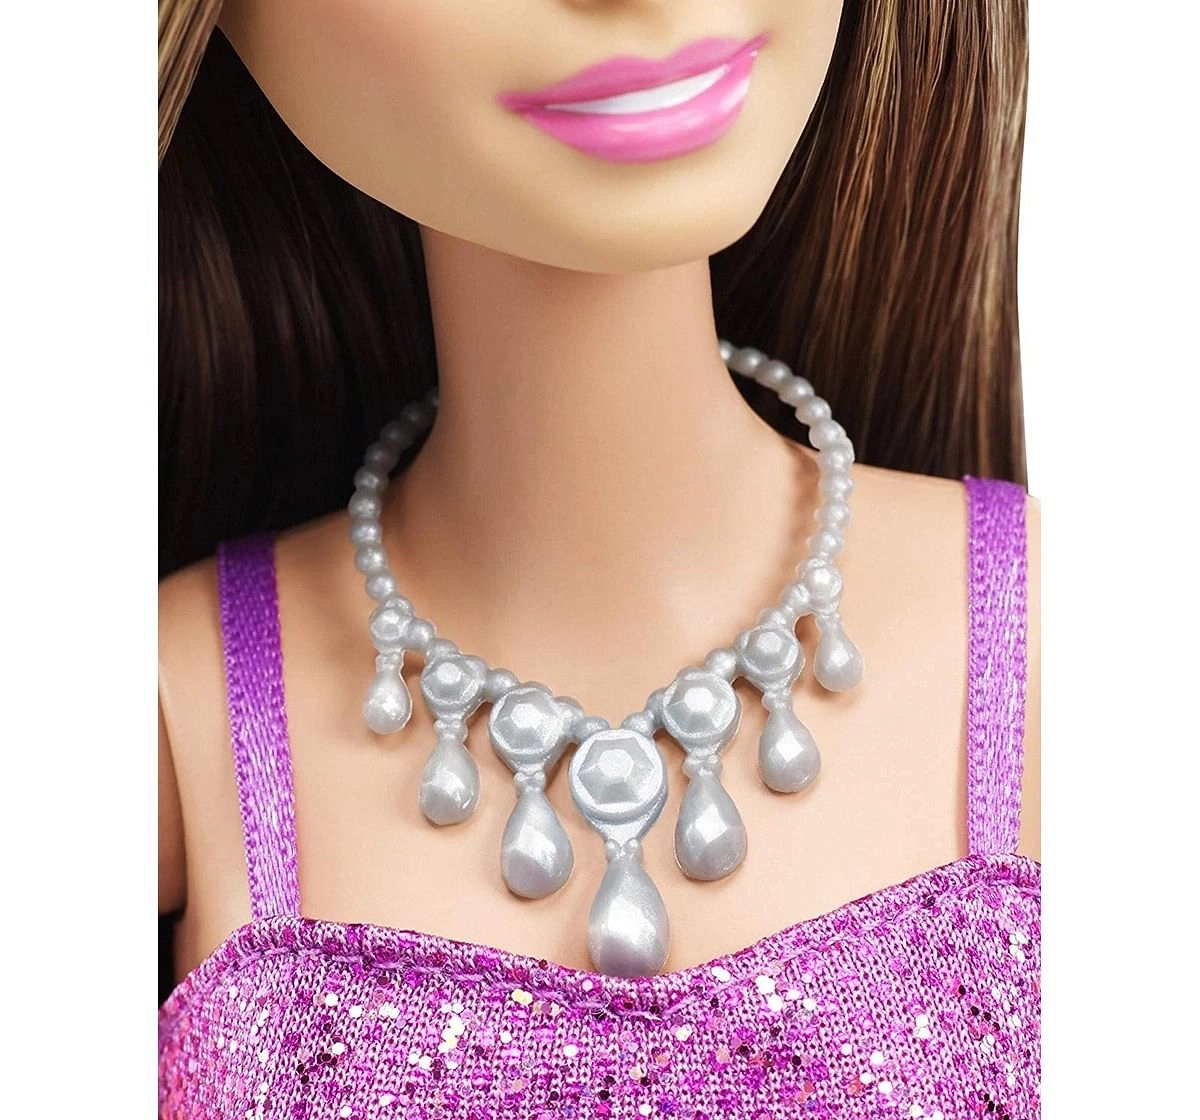 Barbie Glitz Doll,  Dolls & Accessories for Kids age 3Y+, Assorted